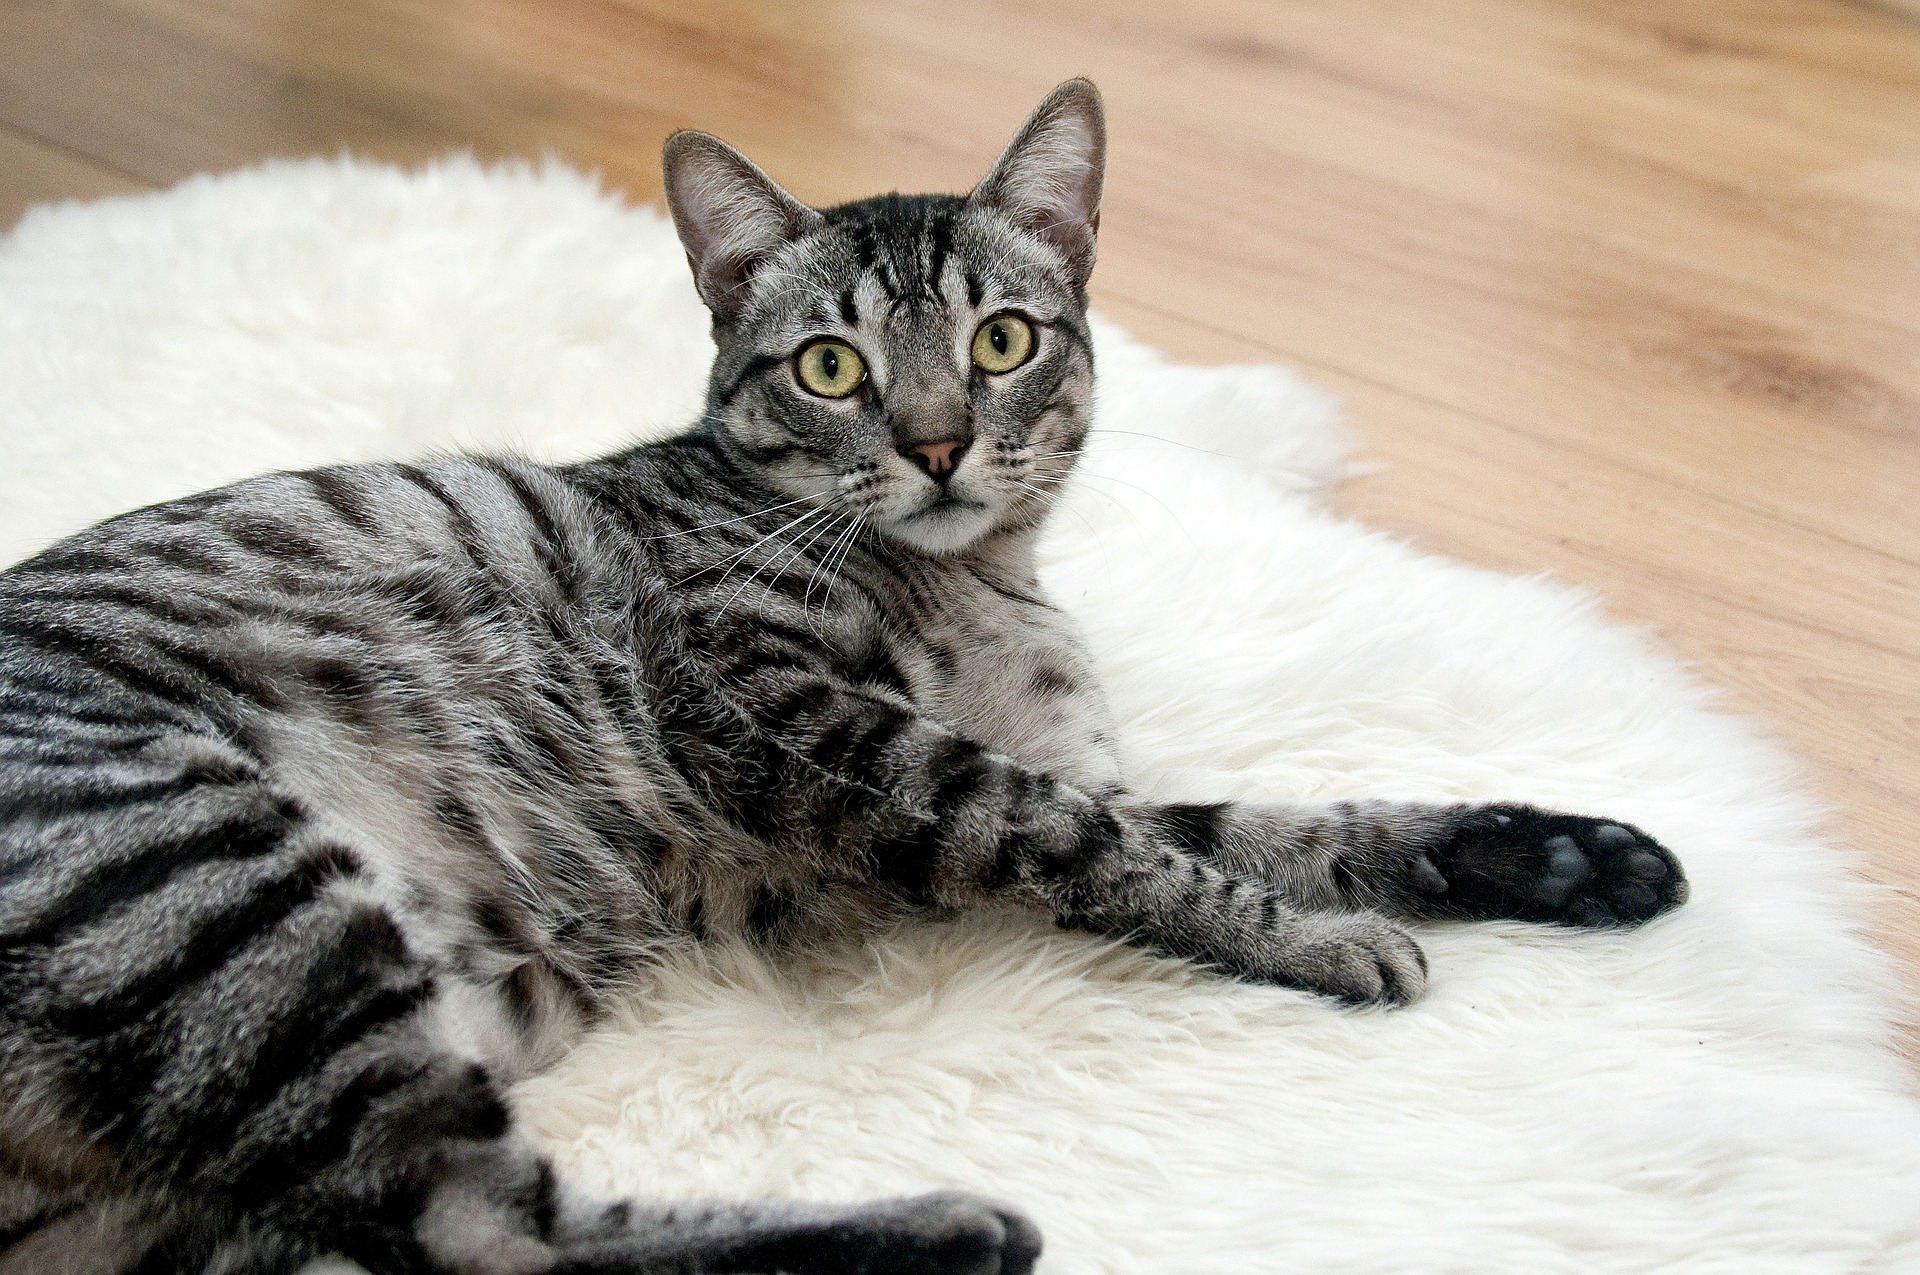 Cat on carpet